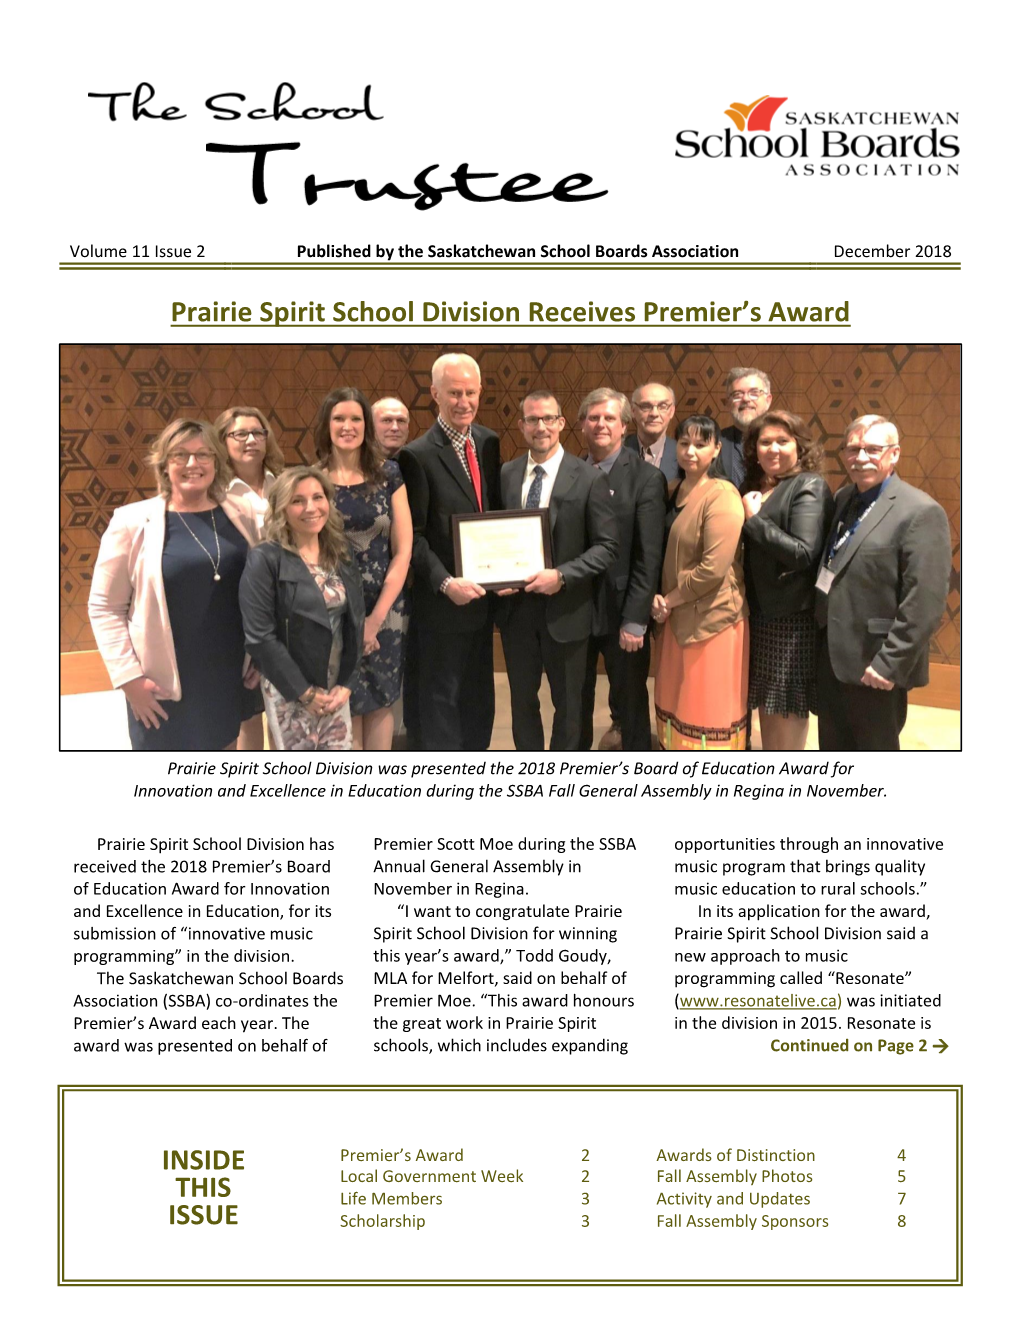 INSIDE THIS ISSUE Prairie Spirit School Division Receives Premier's